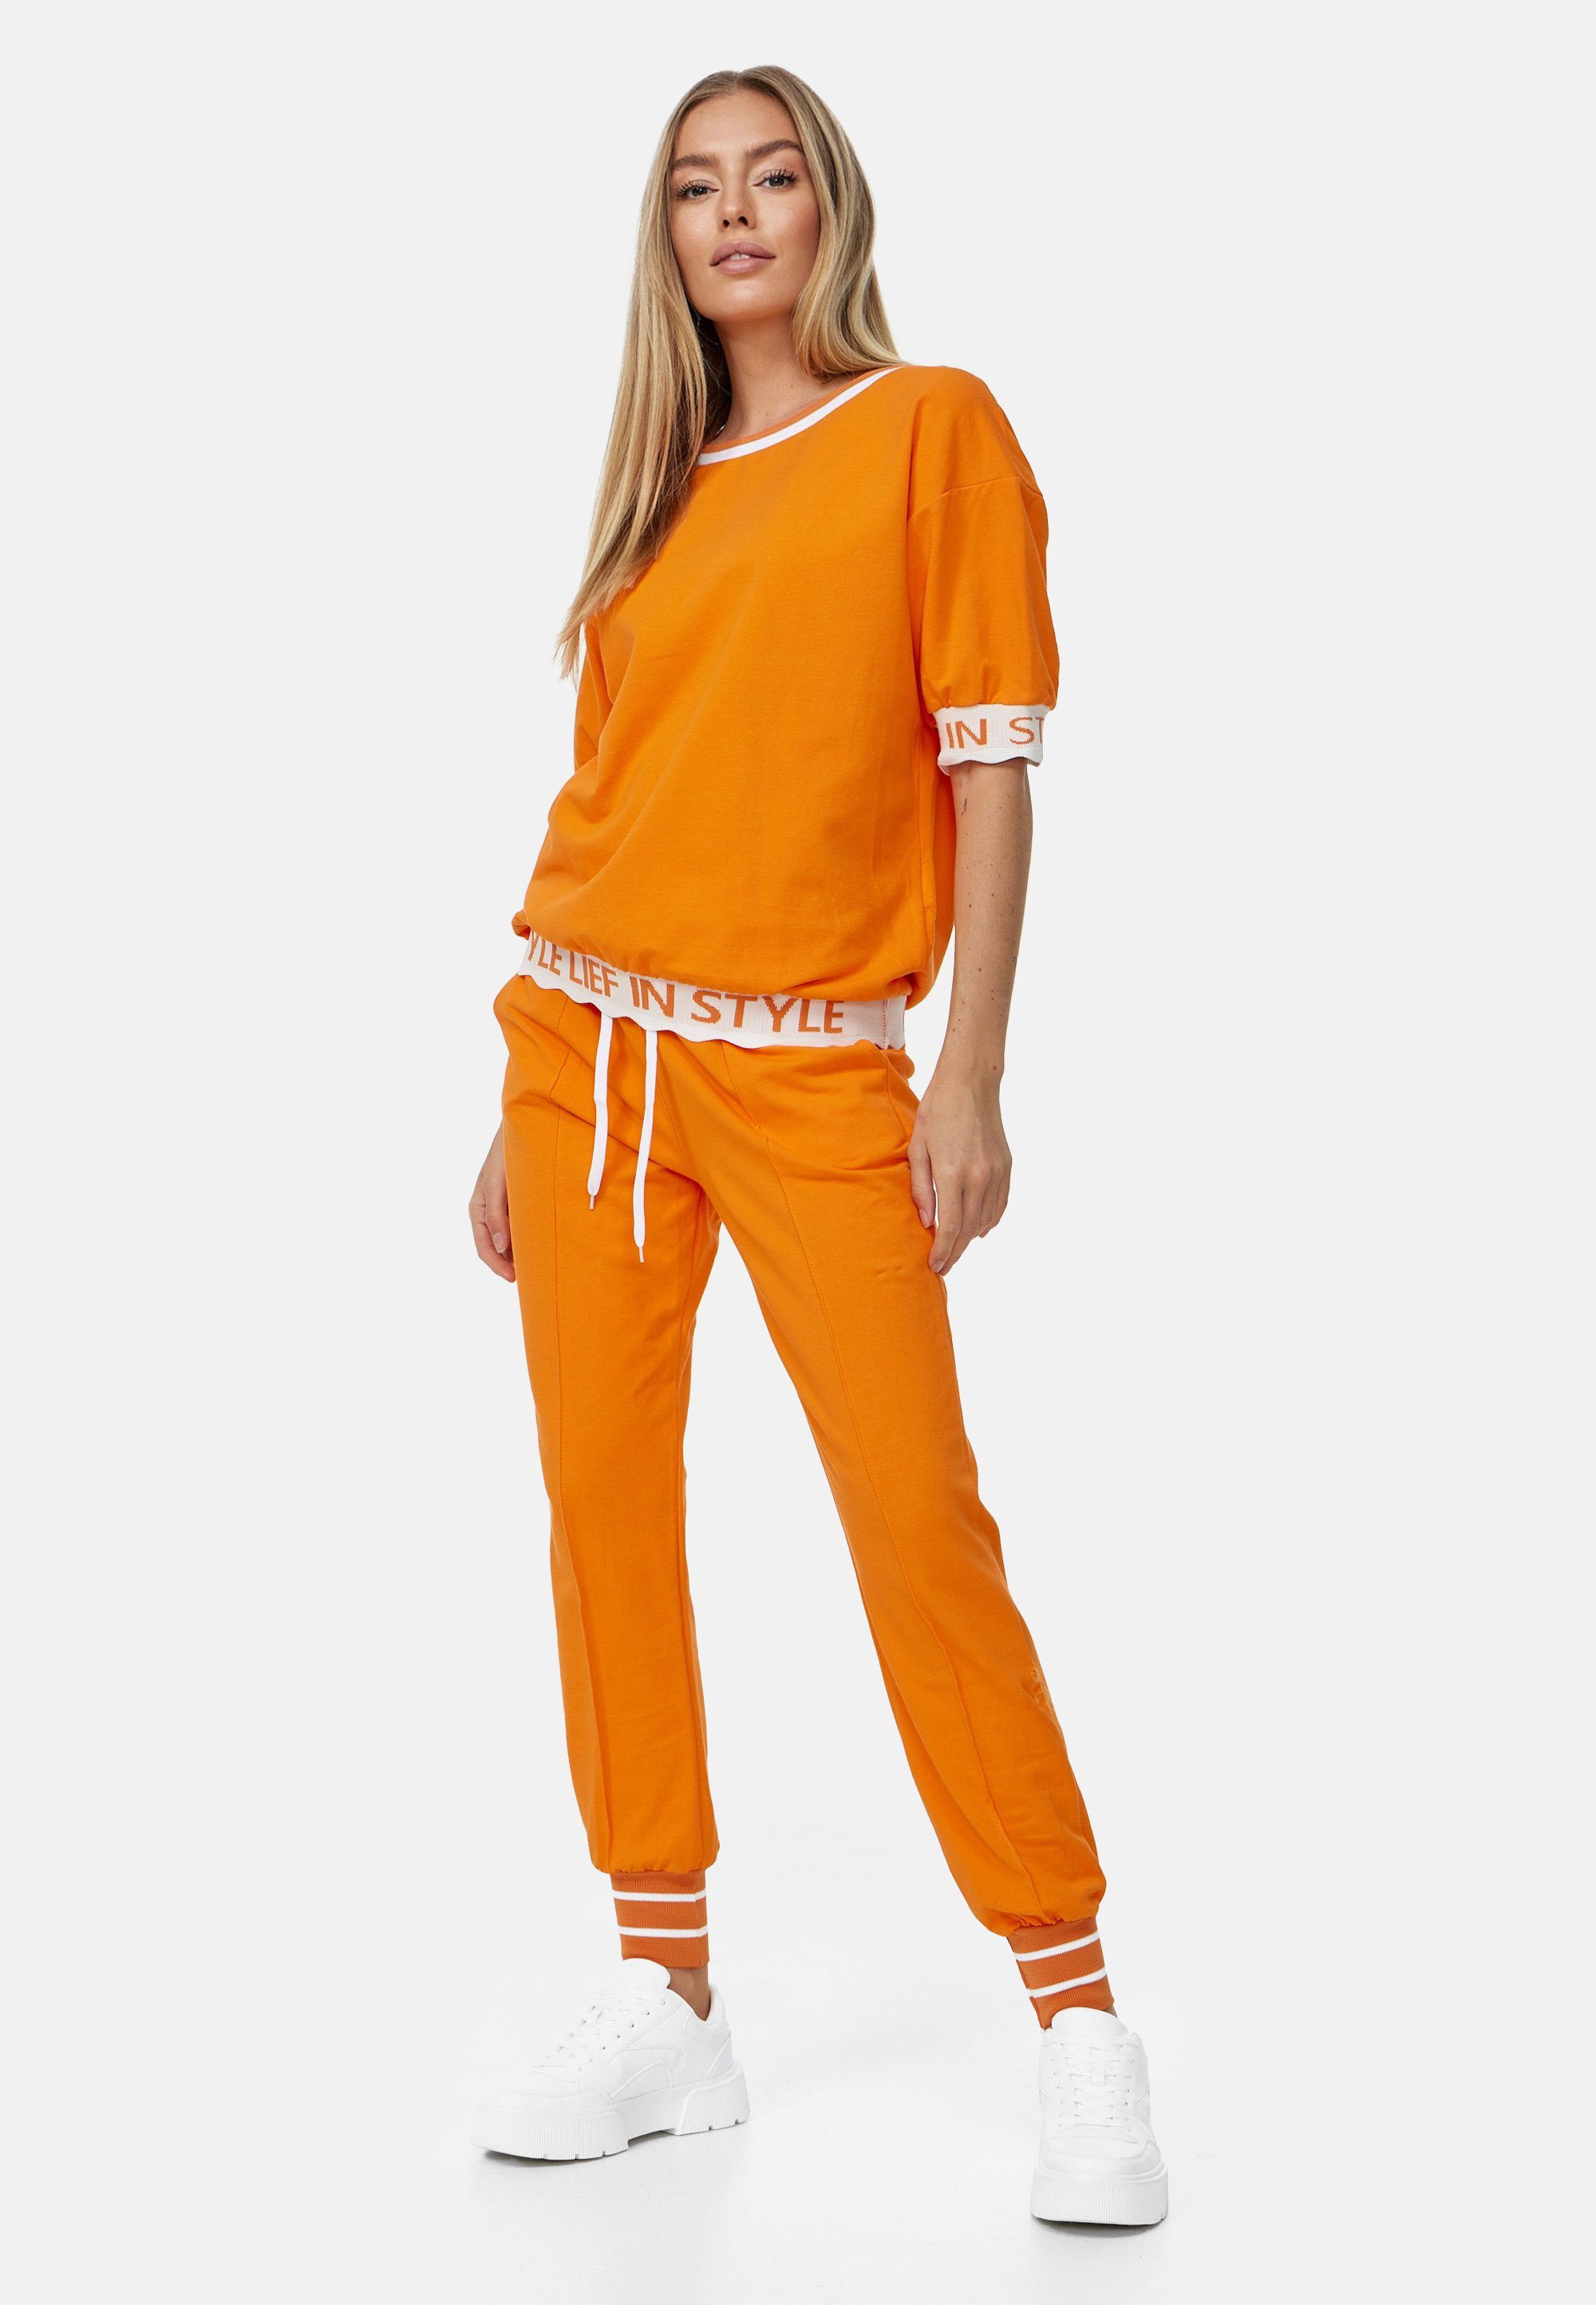 Schriftzug T-Shirt stylishem Decay mit orange